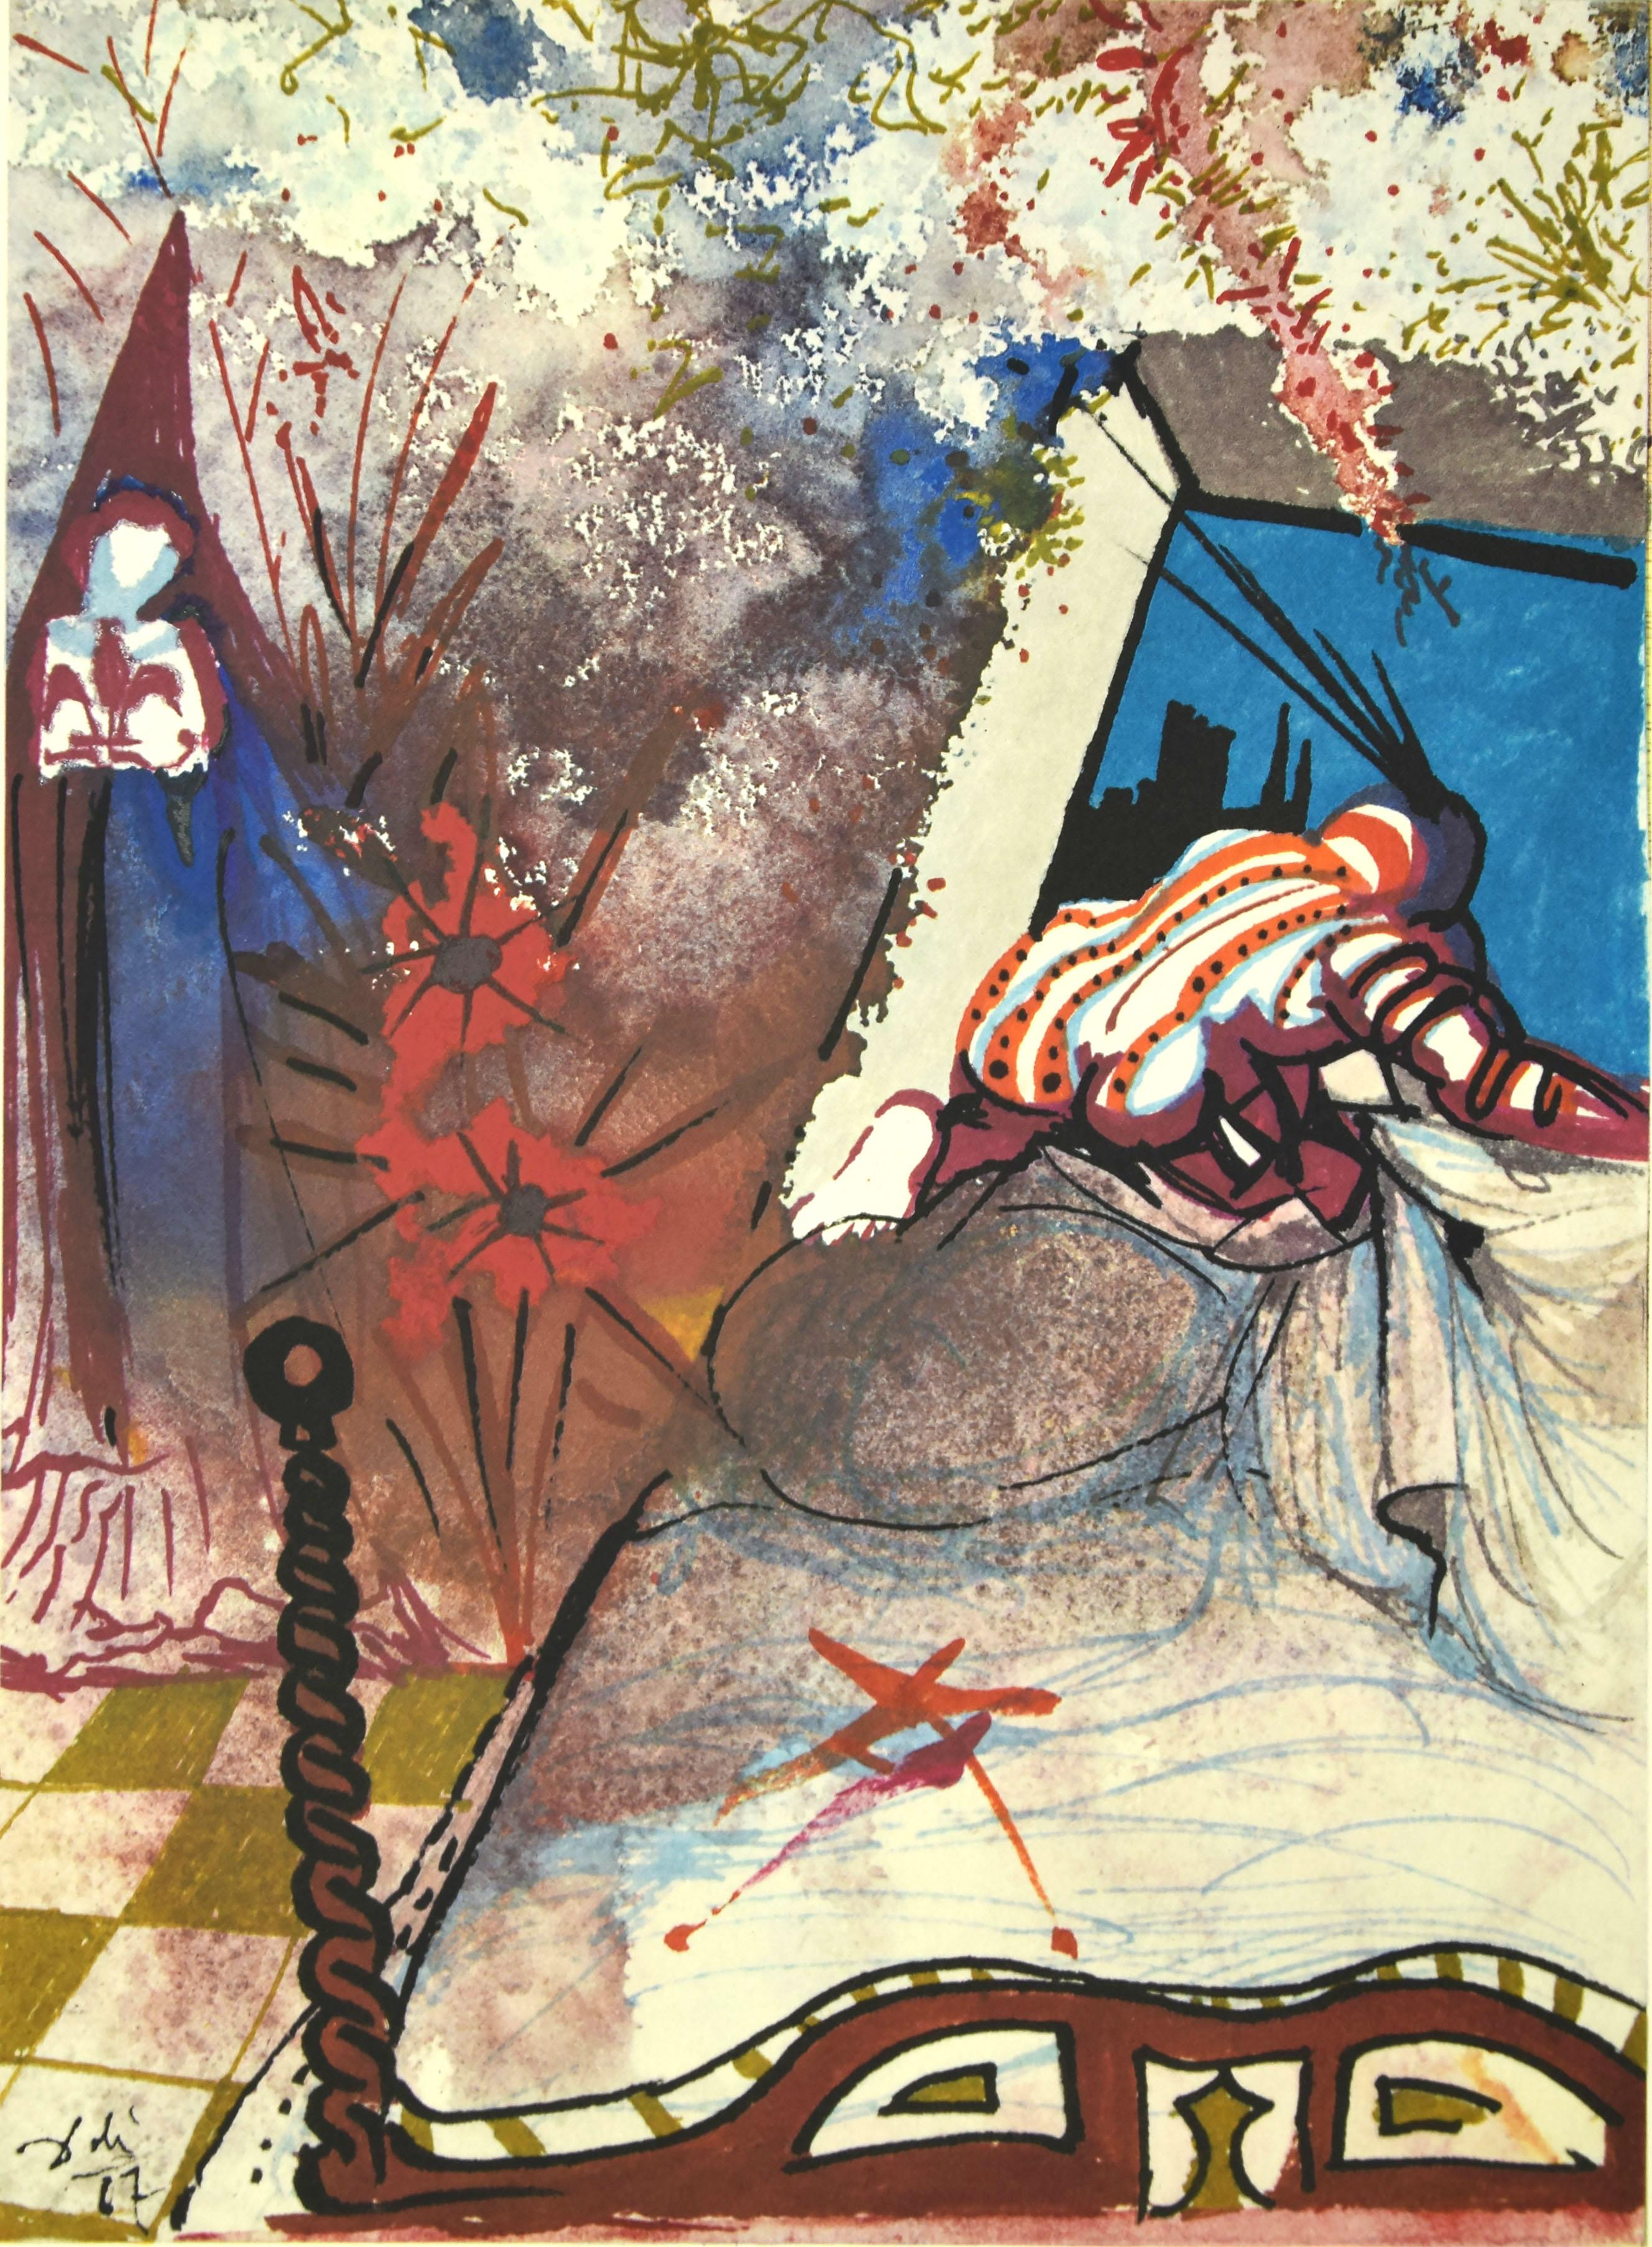 Salvador Dalí Print - Romeo and Juliet Act 3, Scene 5 - Original Lithograph by Salvador Dalì - 1975